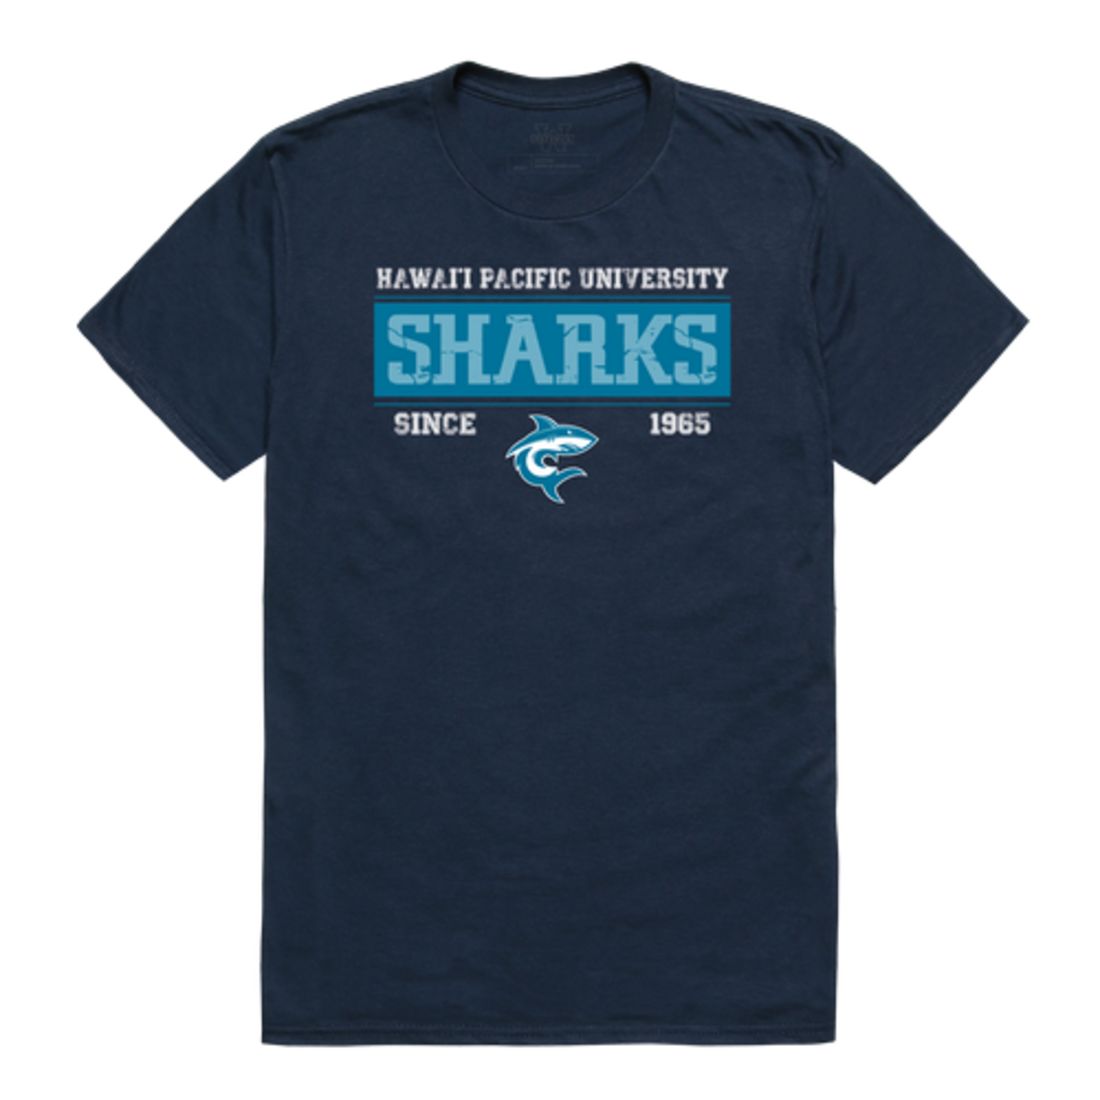 Hawaii Pacific University Sharks Established T-Shirt Tee